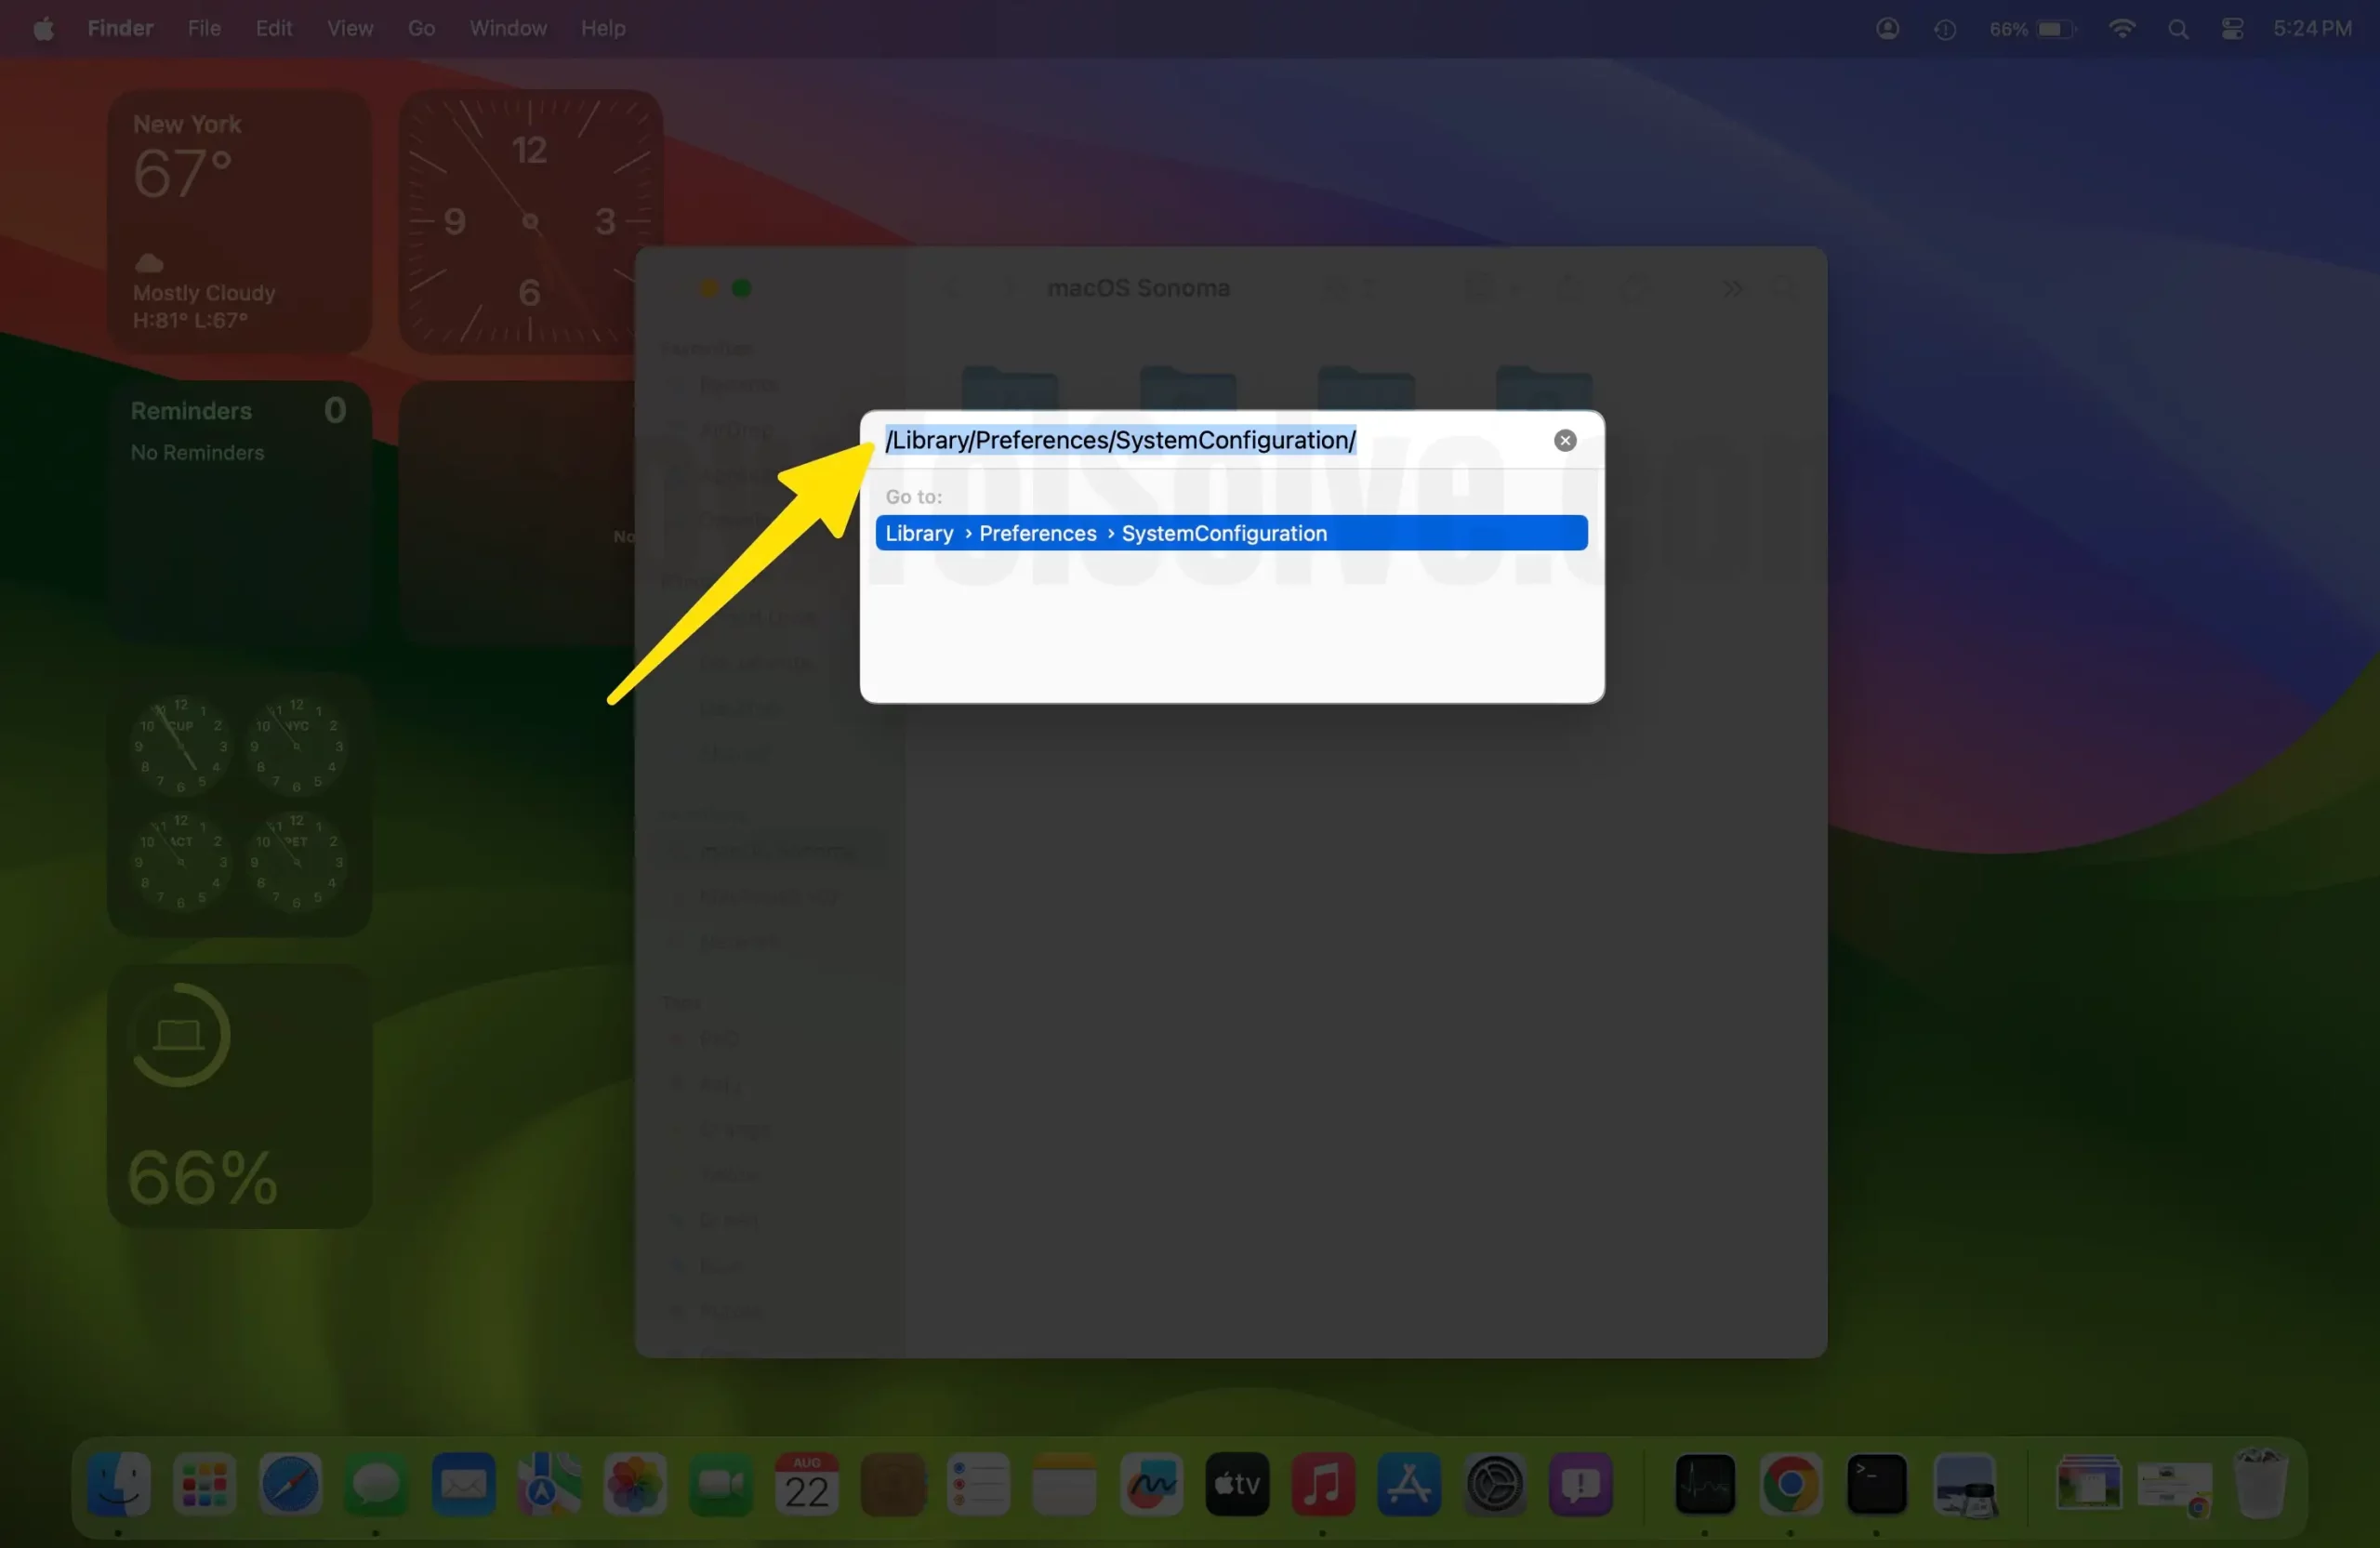 Open System Configuration folder on Mac